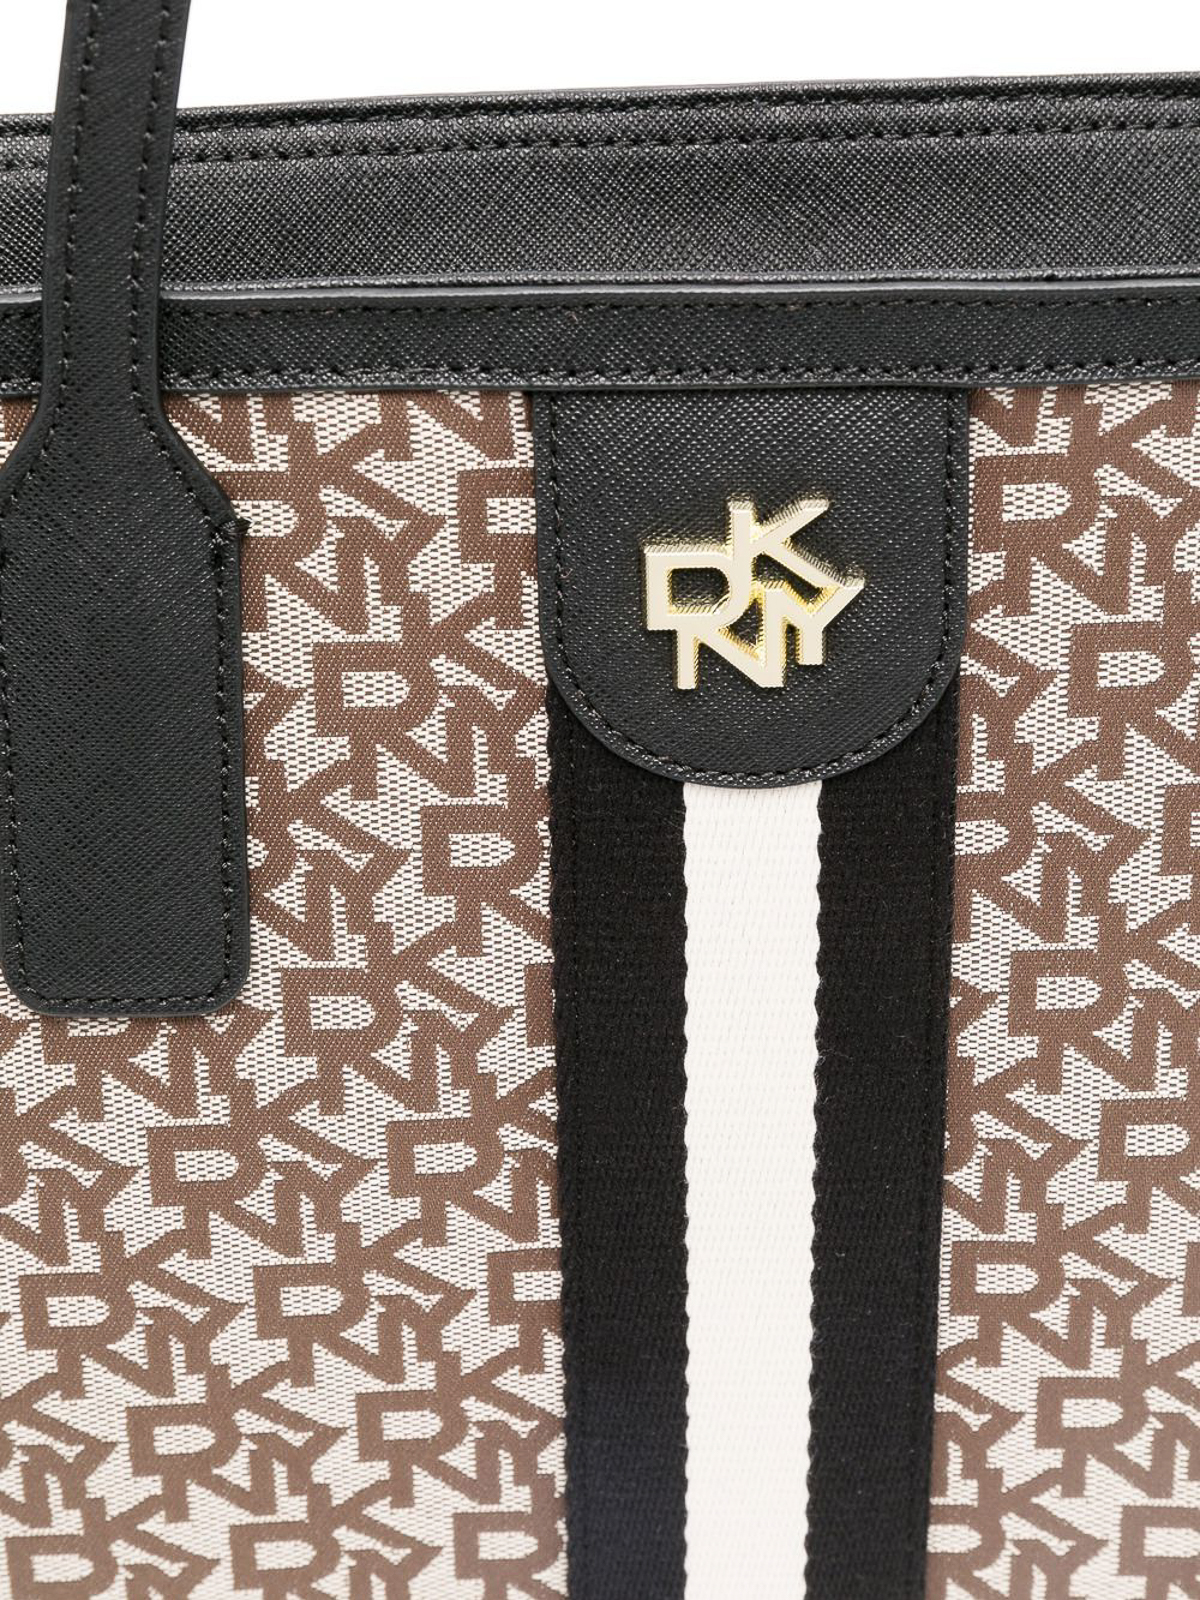 Buy Dkny CAROL Monogram Mini Tote Bag In Brown